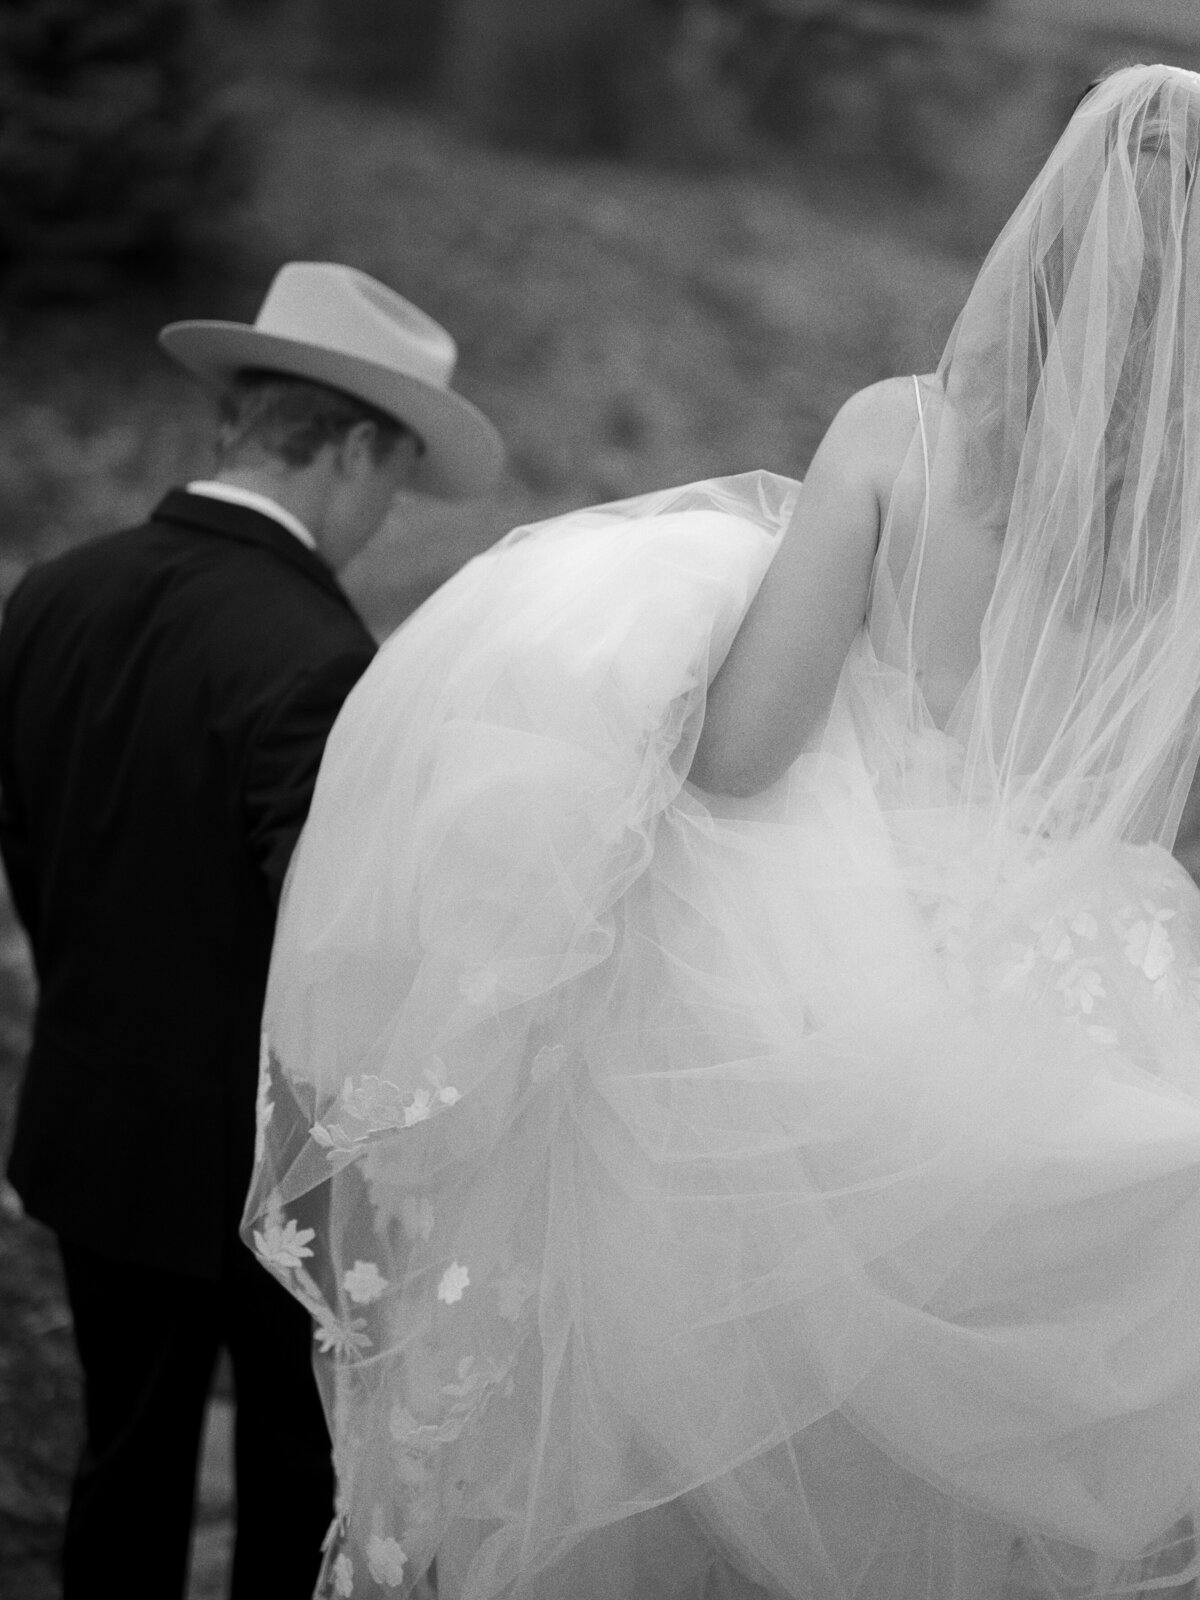 52-LauraGordon-©_best wedding photographer